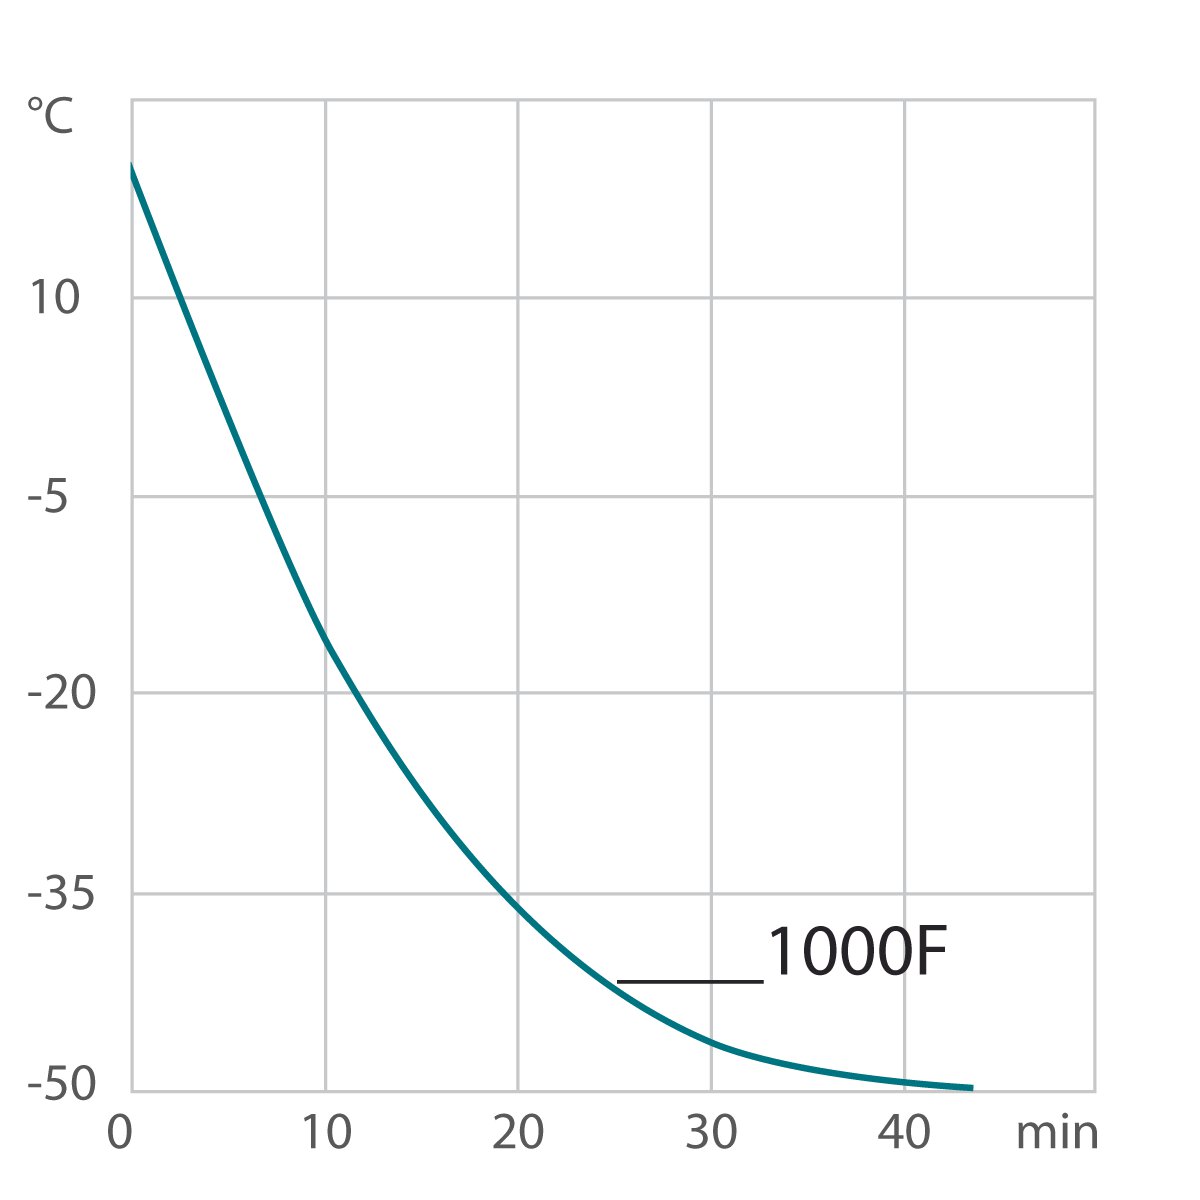 Cooling curve refrigerated circulator / laboratory circulator 1000F